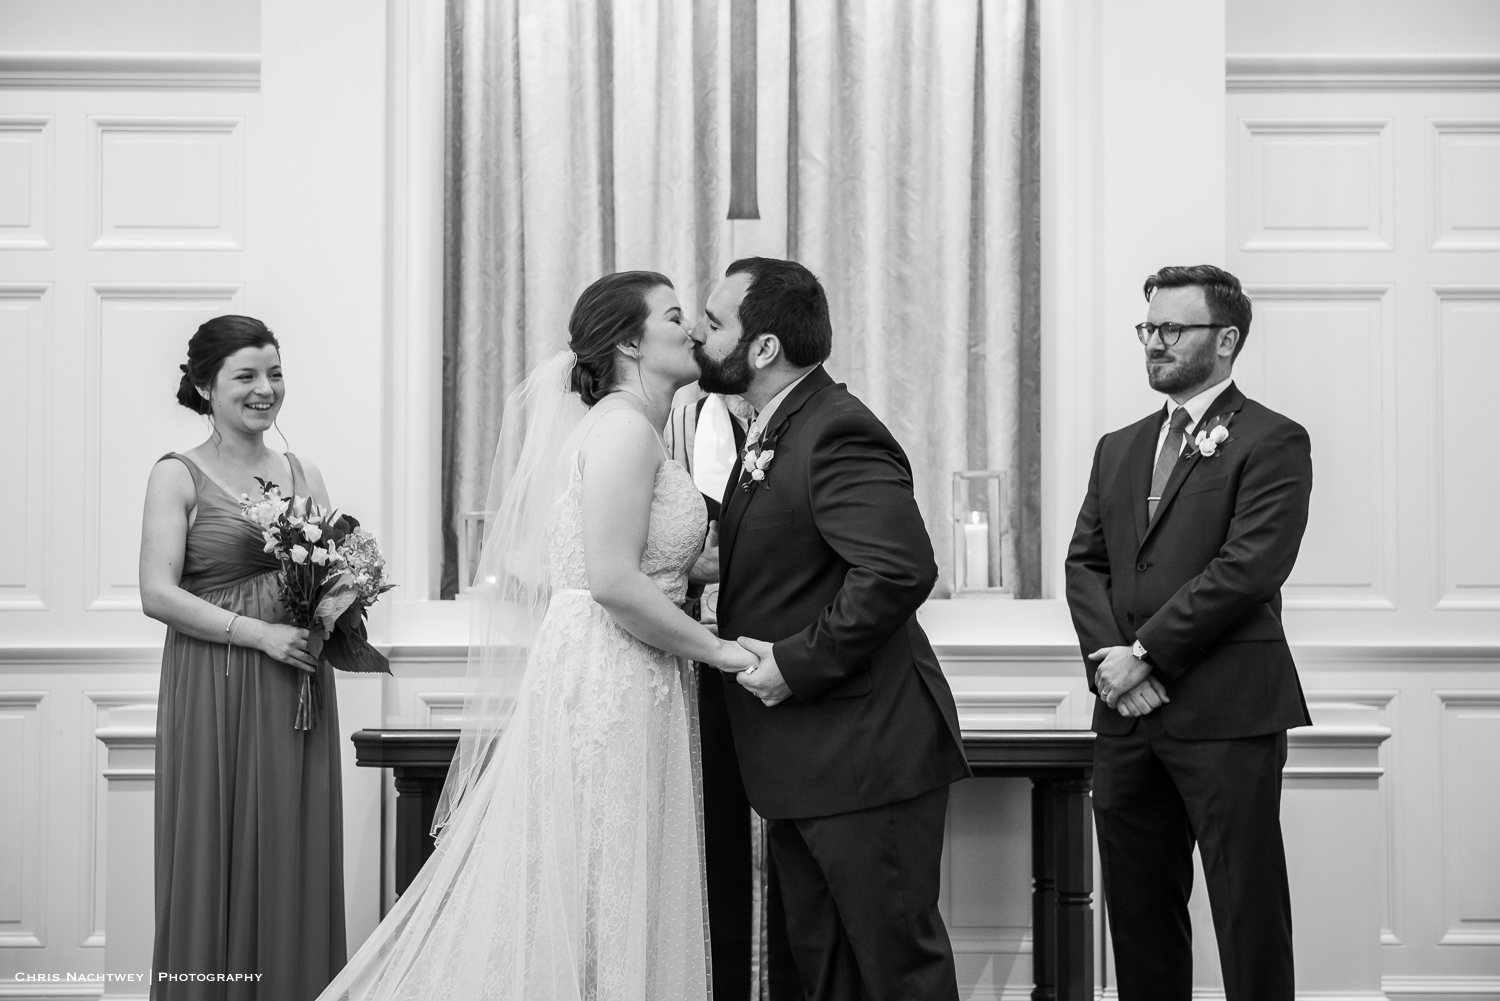 wedding-photos-united-states-coast-guard-academy-chris-nachtwey-photography-2019-13.jpg